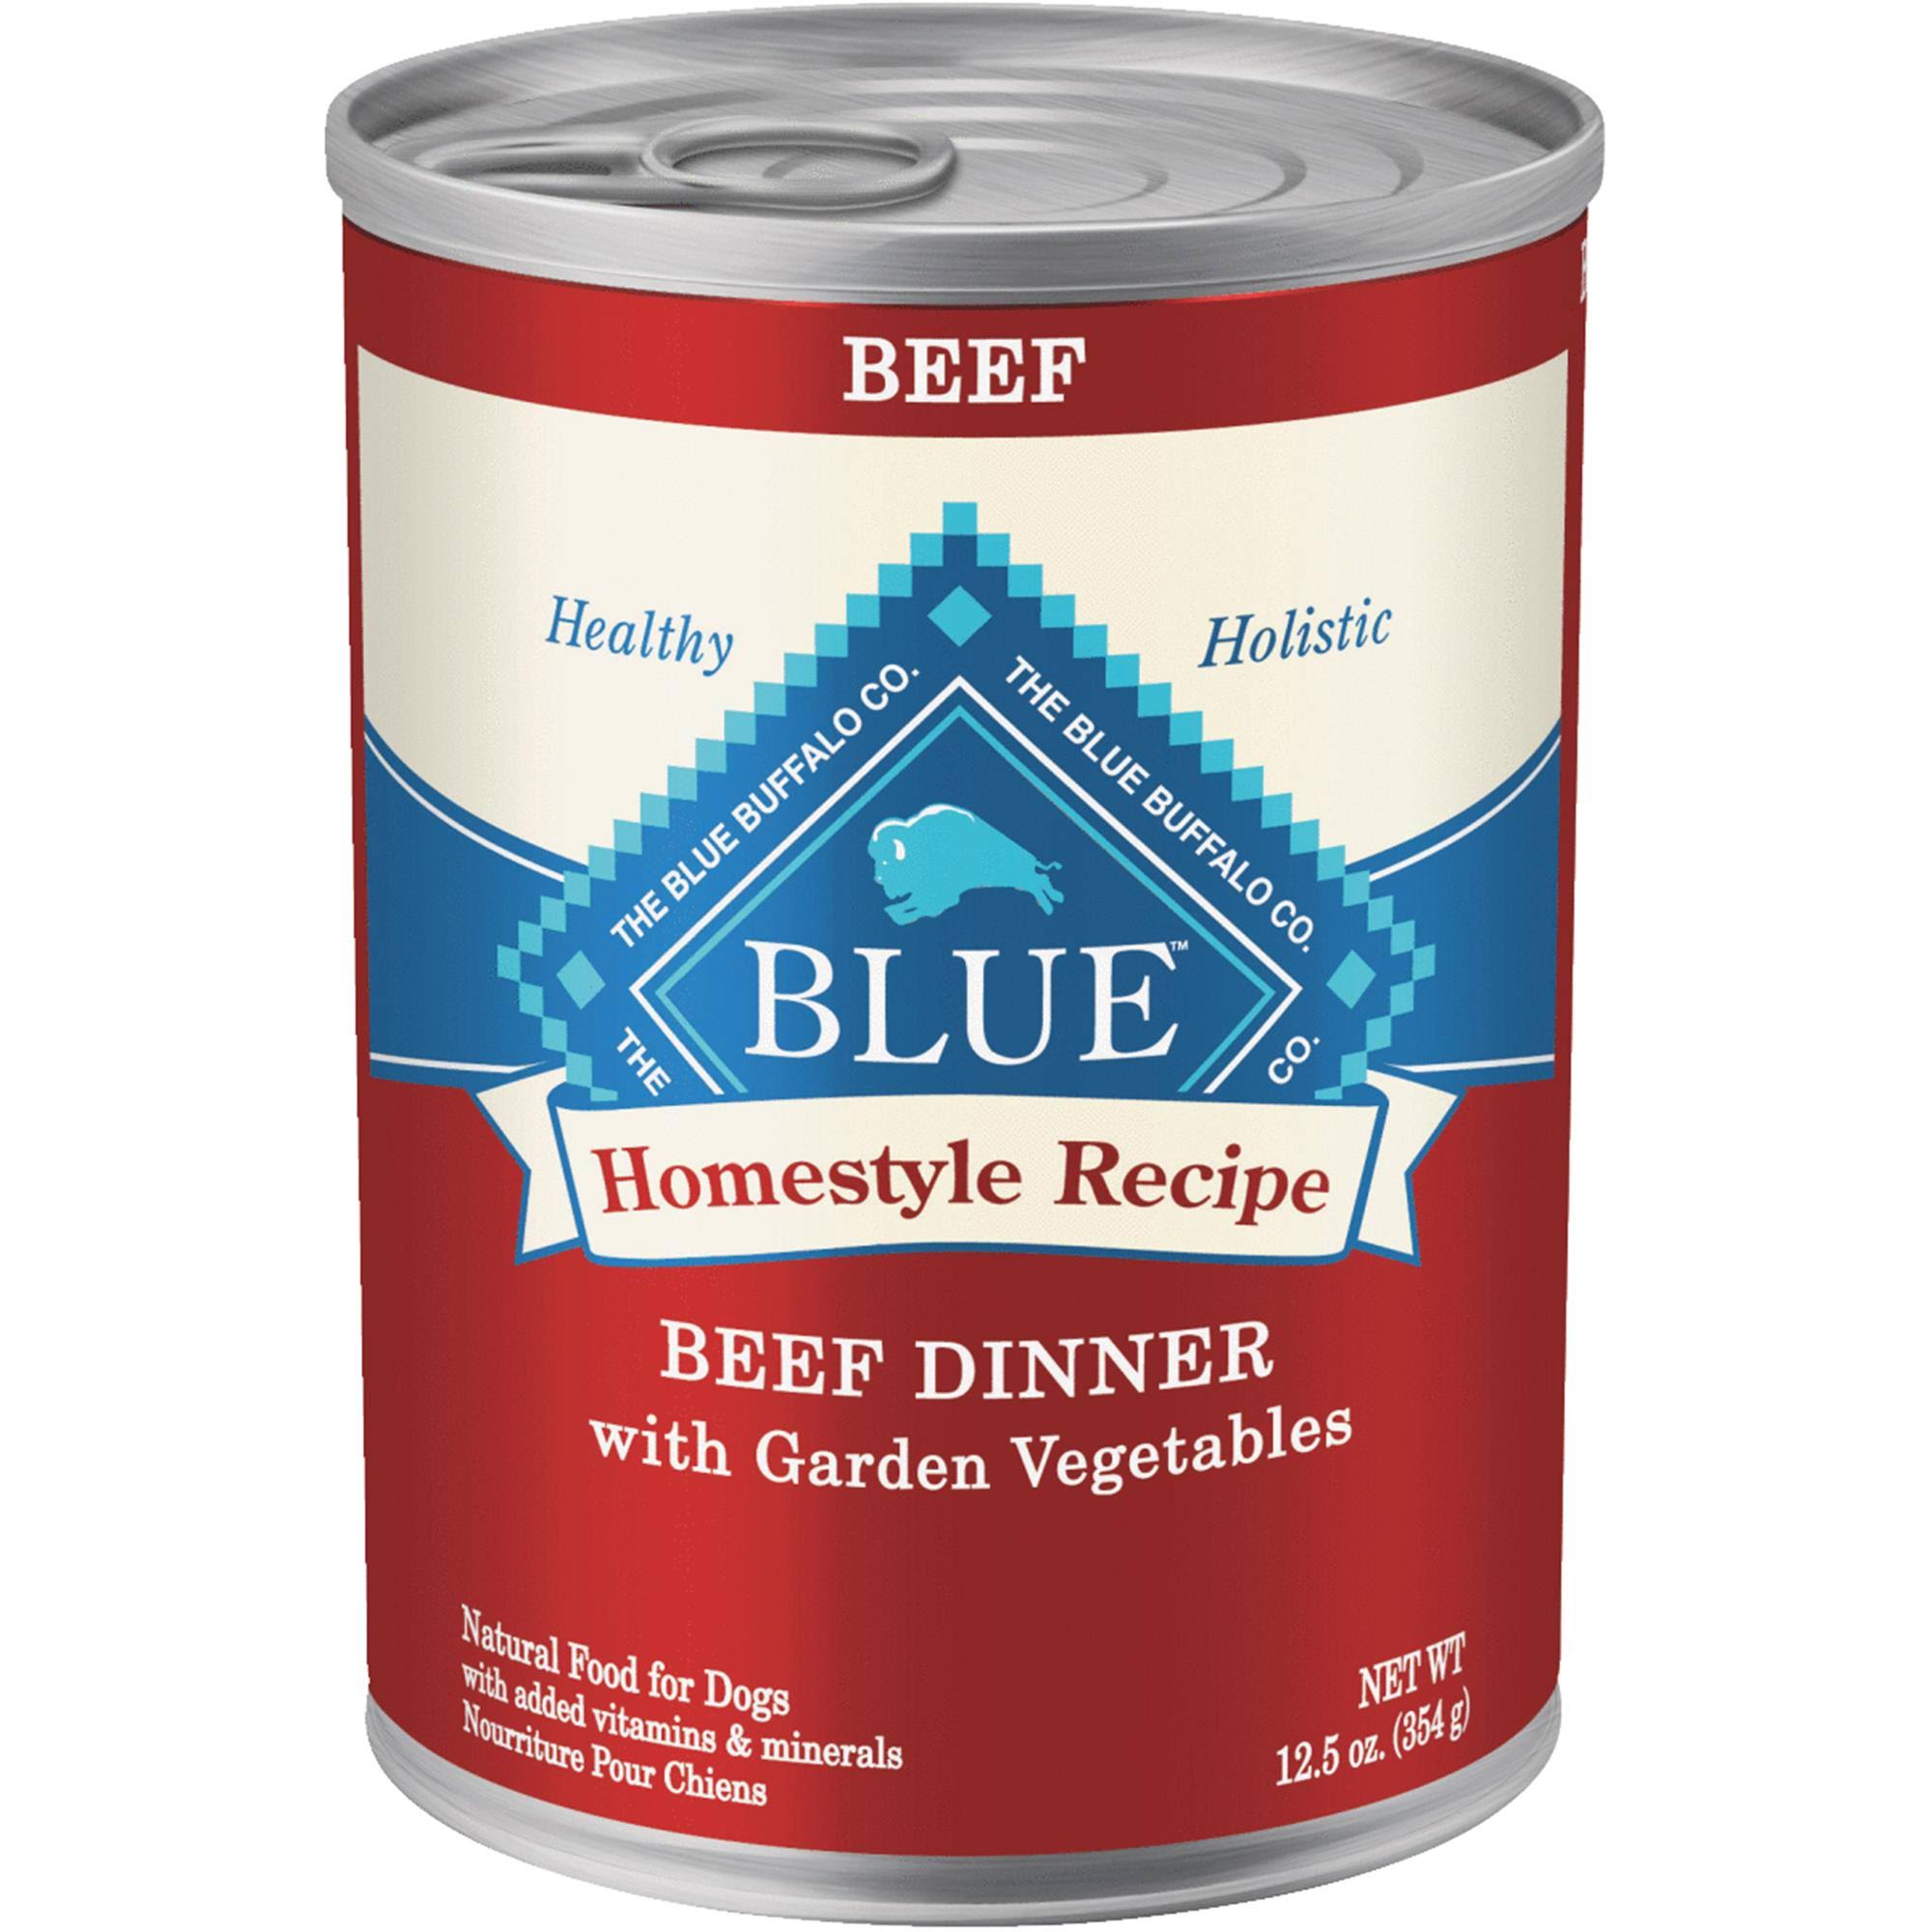 Blue Buffalo Homestyle Recipe Canned Dog Food - Beef Dinner, 12.5oz